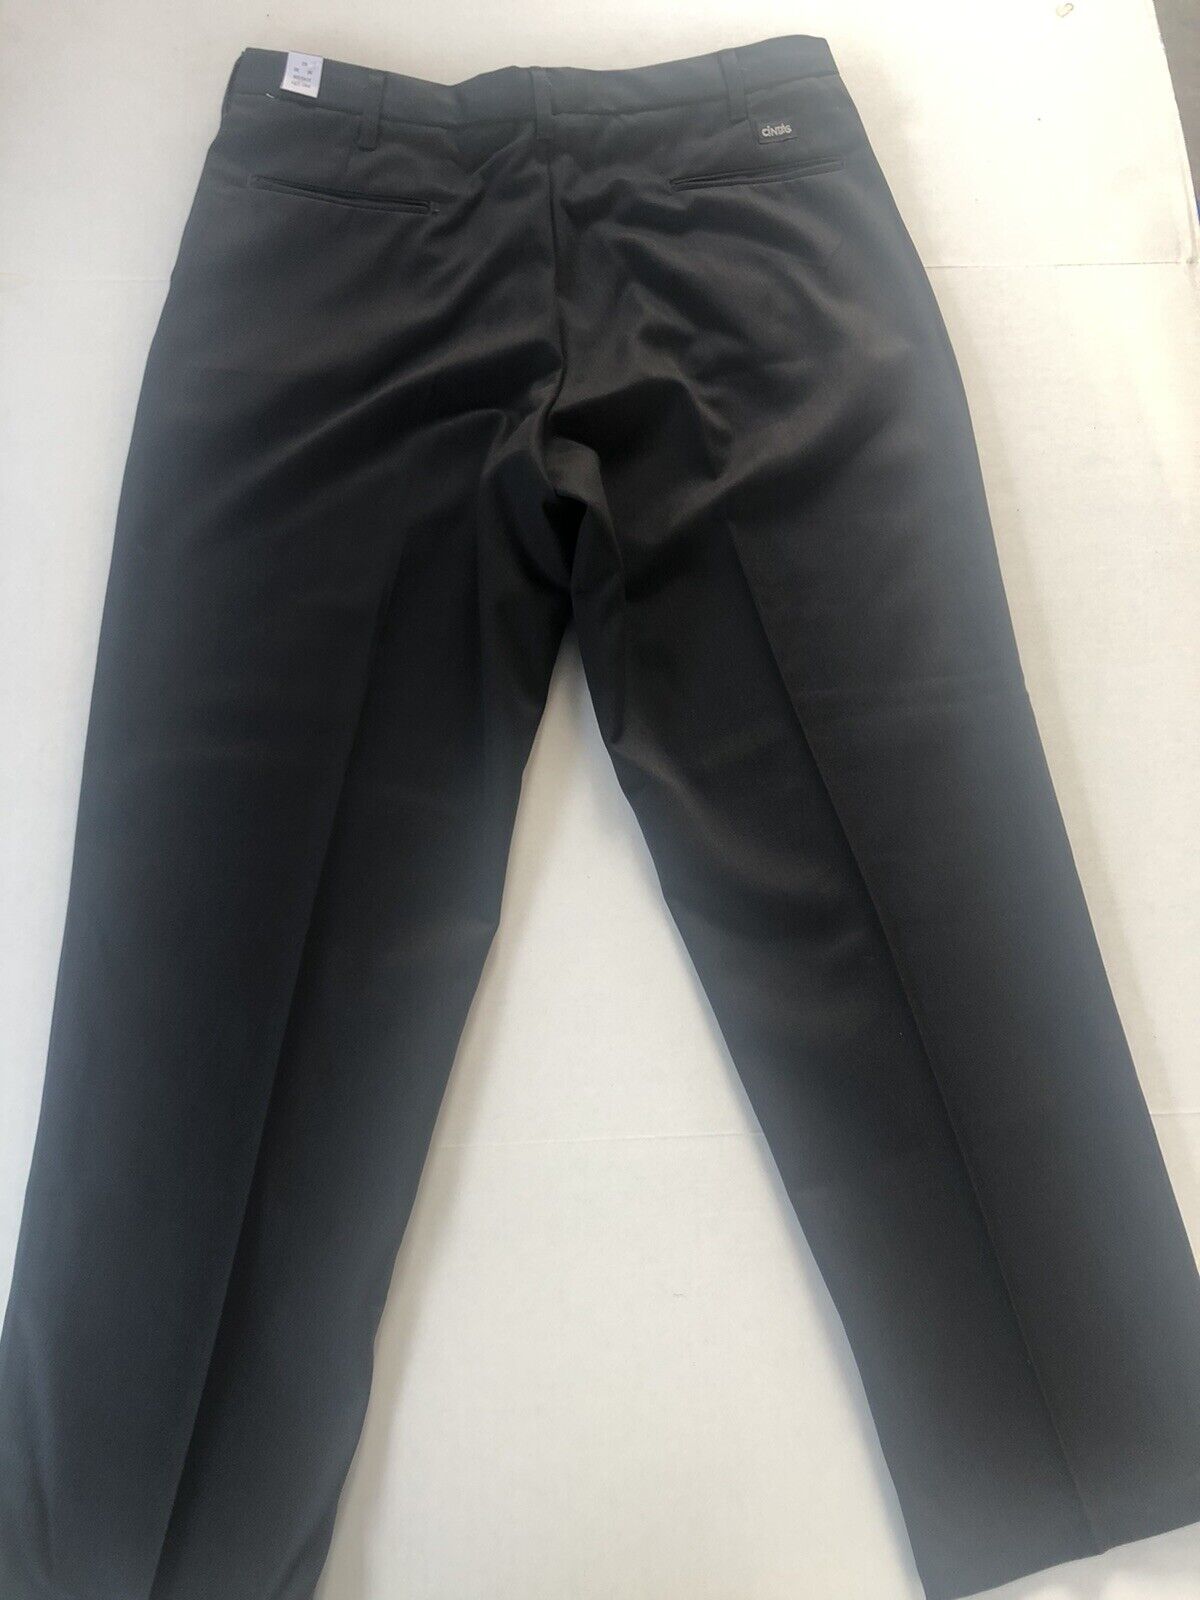 3 Cintas Comfort Flex Charcoal  Gray Work Pants Size 36x30 #945-33 cintas Does Not Apply - фотография #6